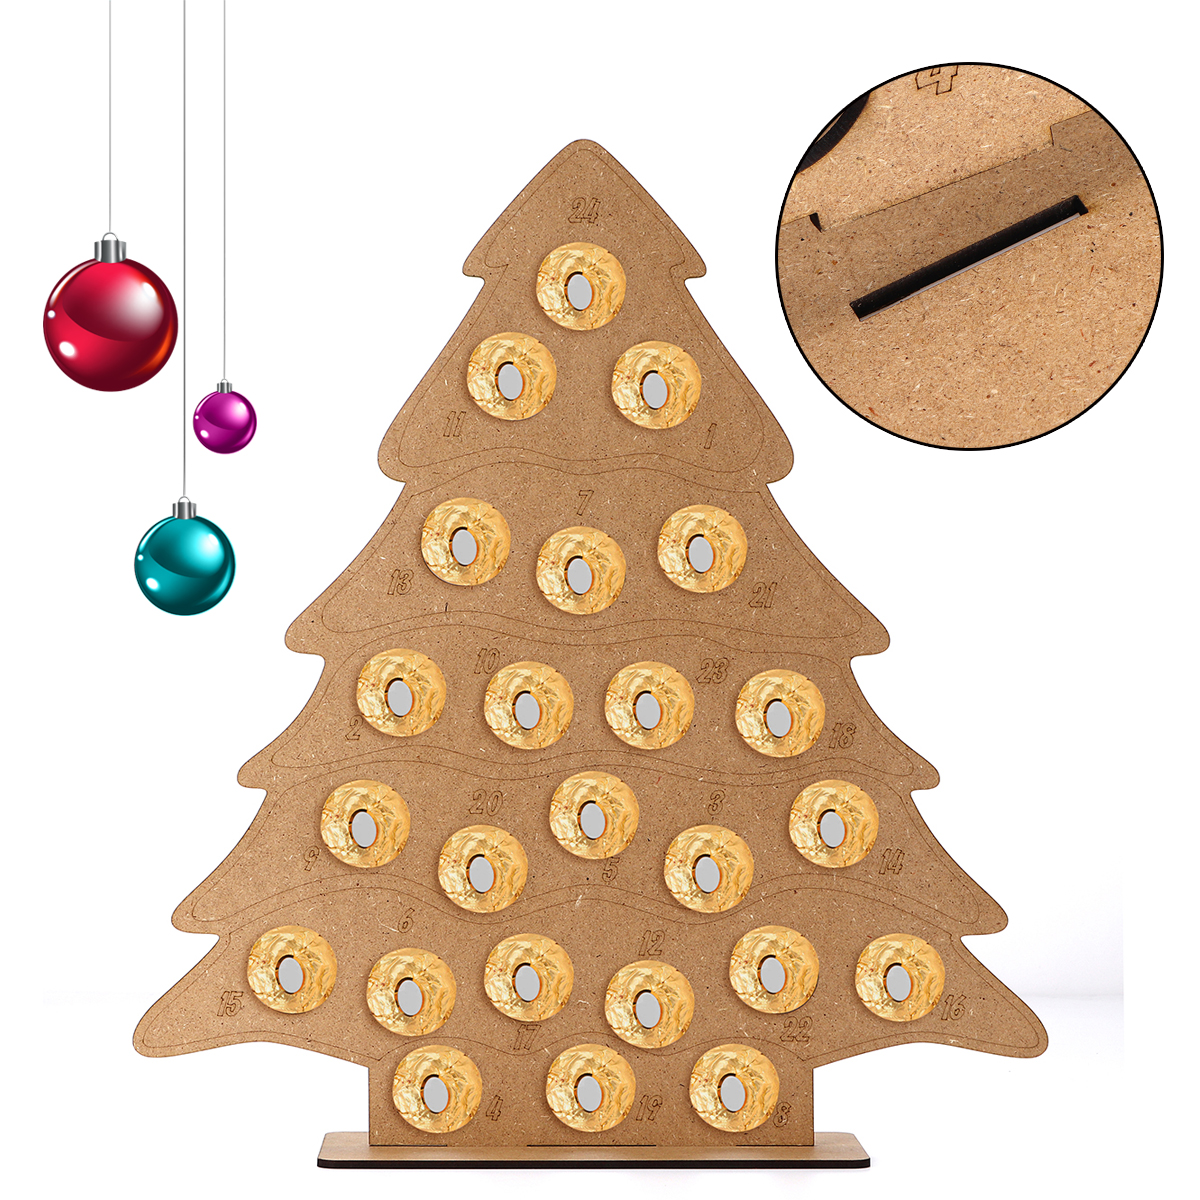 MDF-Wooden-Christmas-Advent-Calendar-Christmas-Tree-Decoration-Fits-24-Circular-Chocolates-Candy-Sta-1587877-3